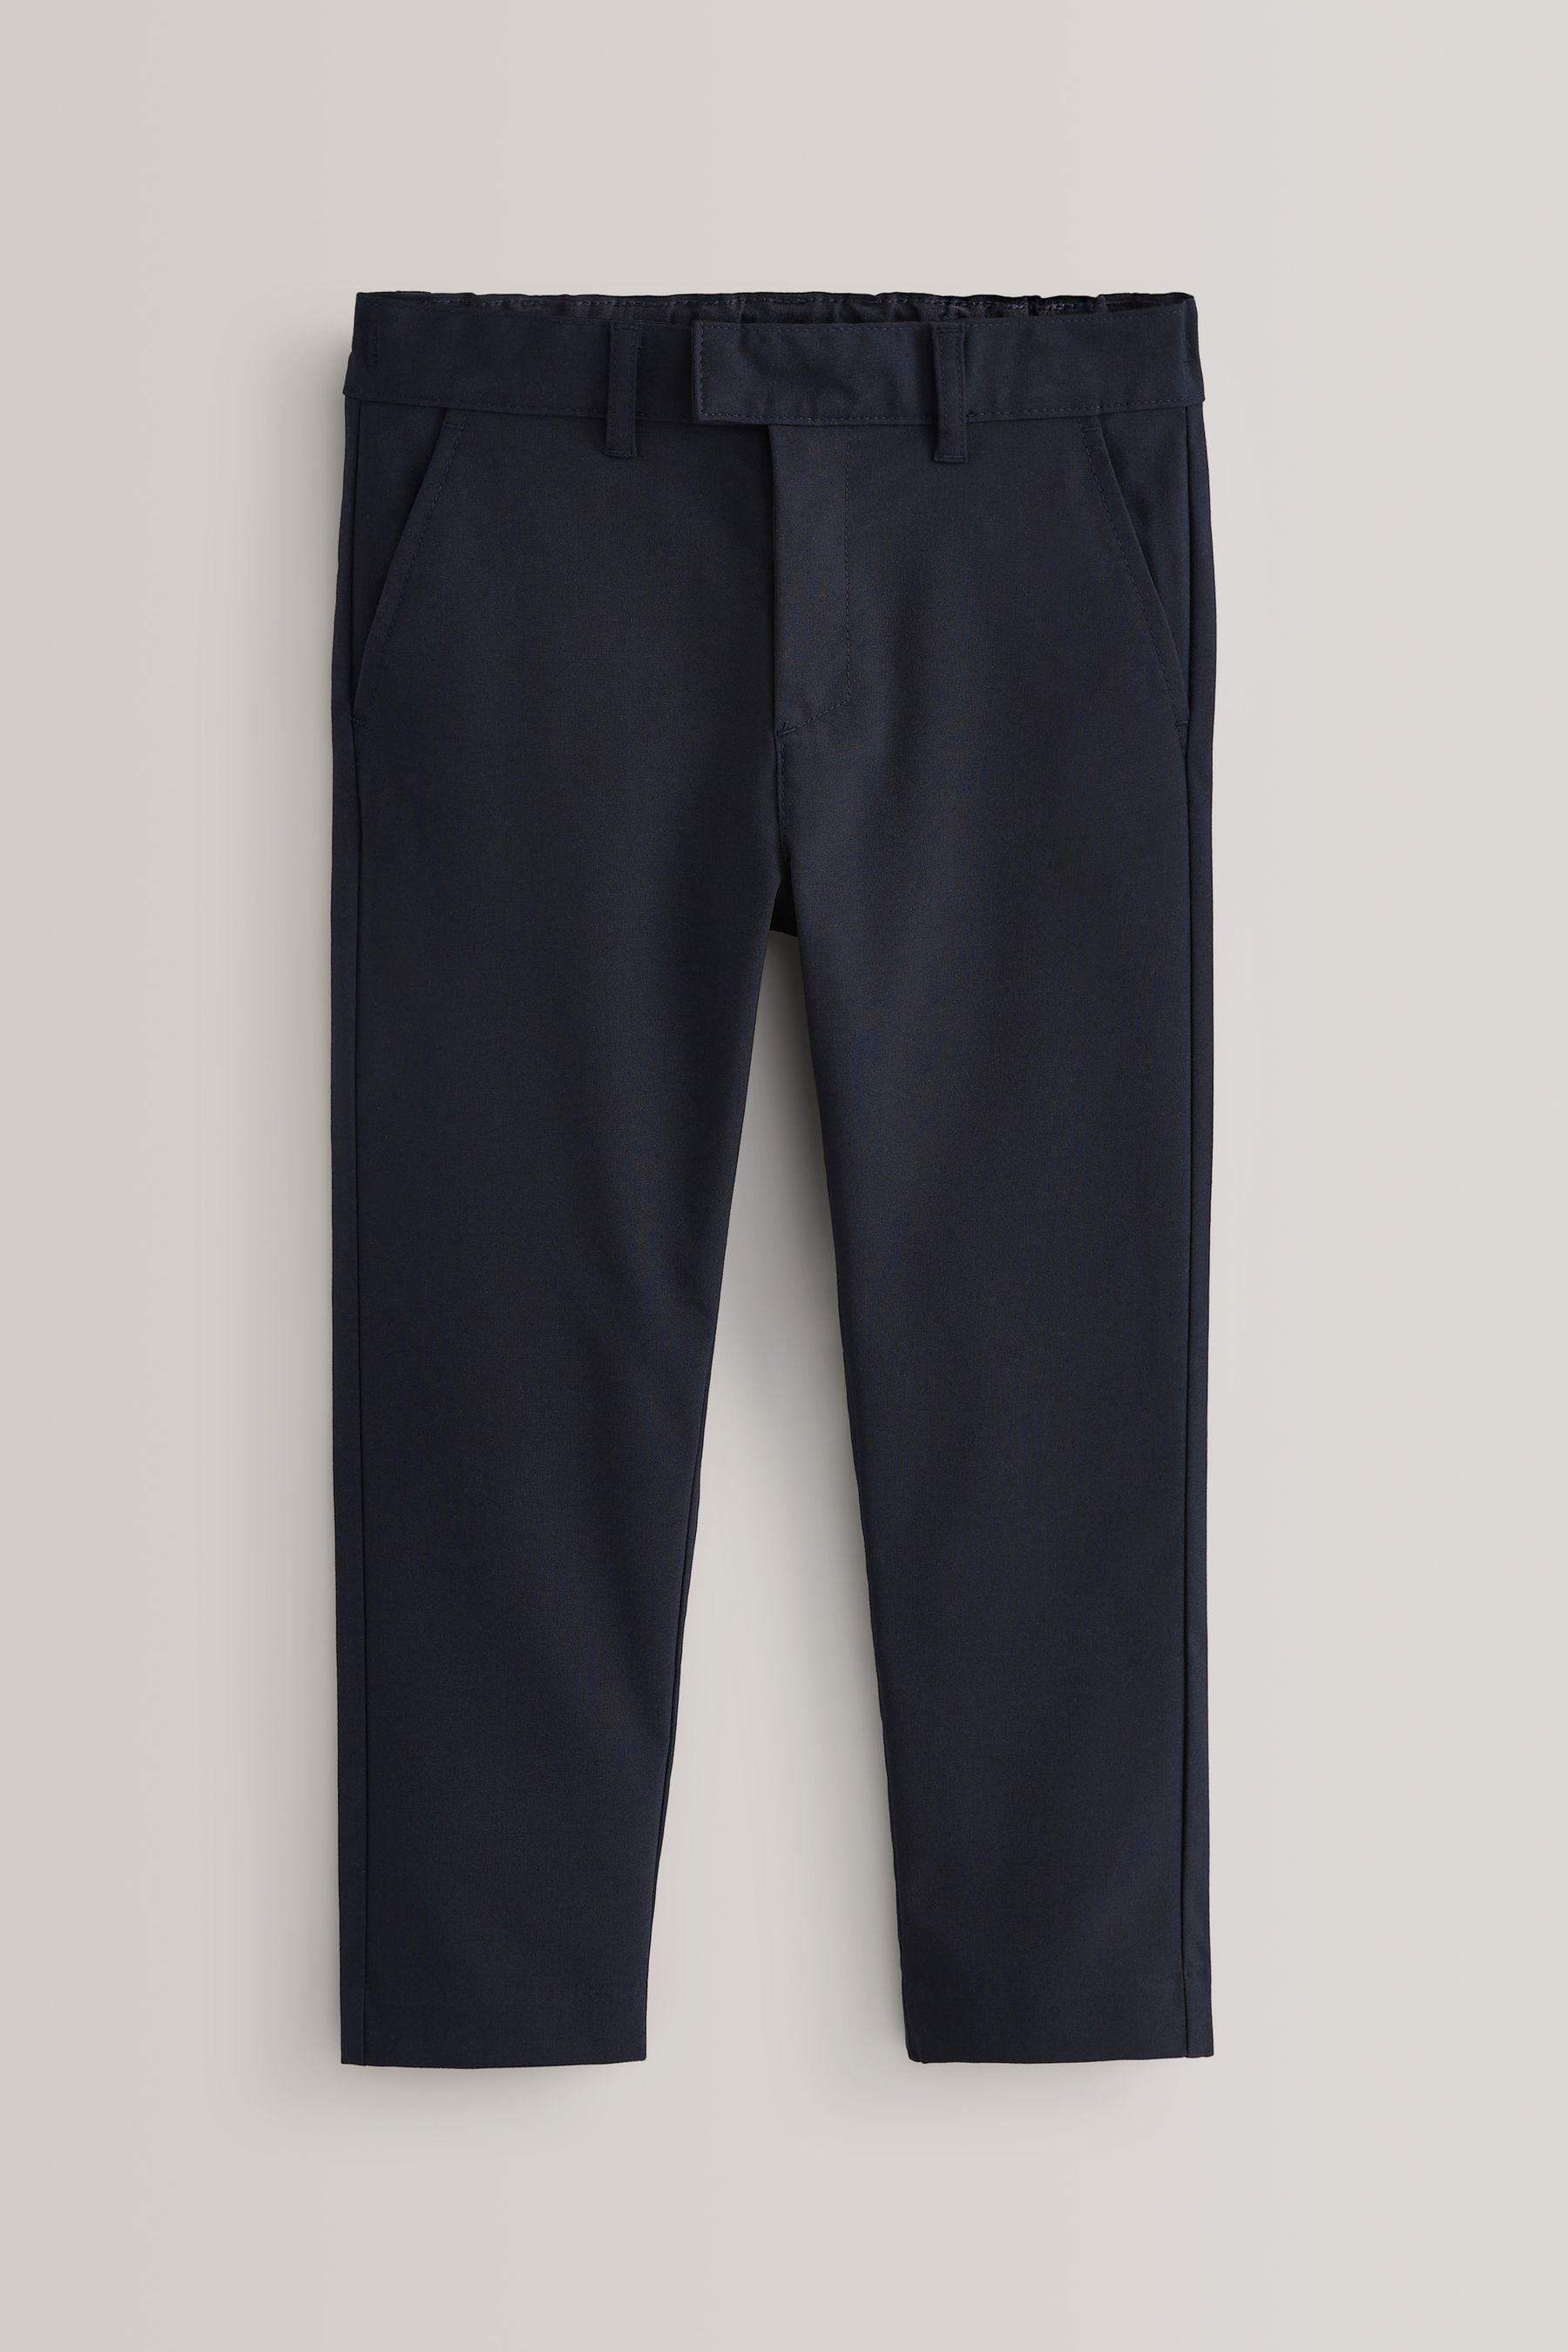 Buy School Formal Stretch Skinny Trousers (3-17yrs) from Next Australia